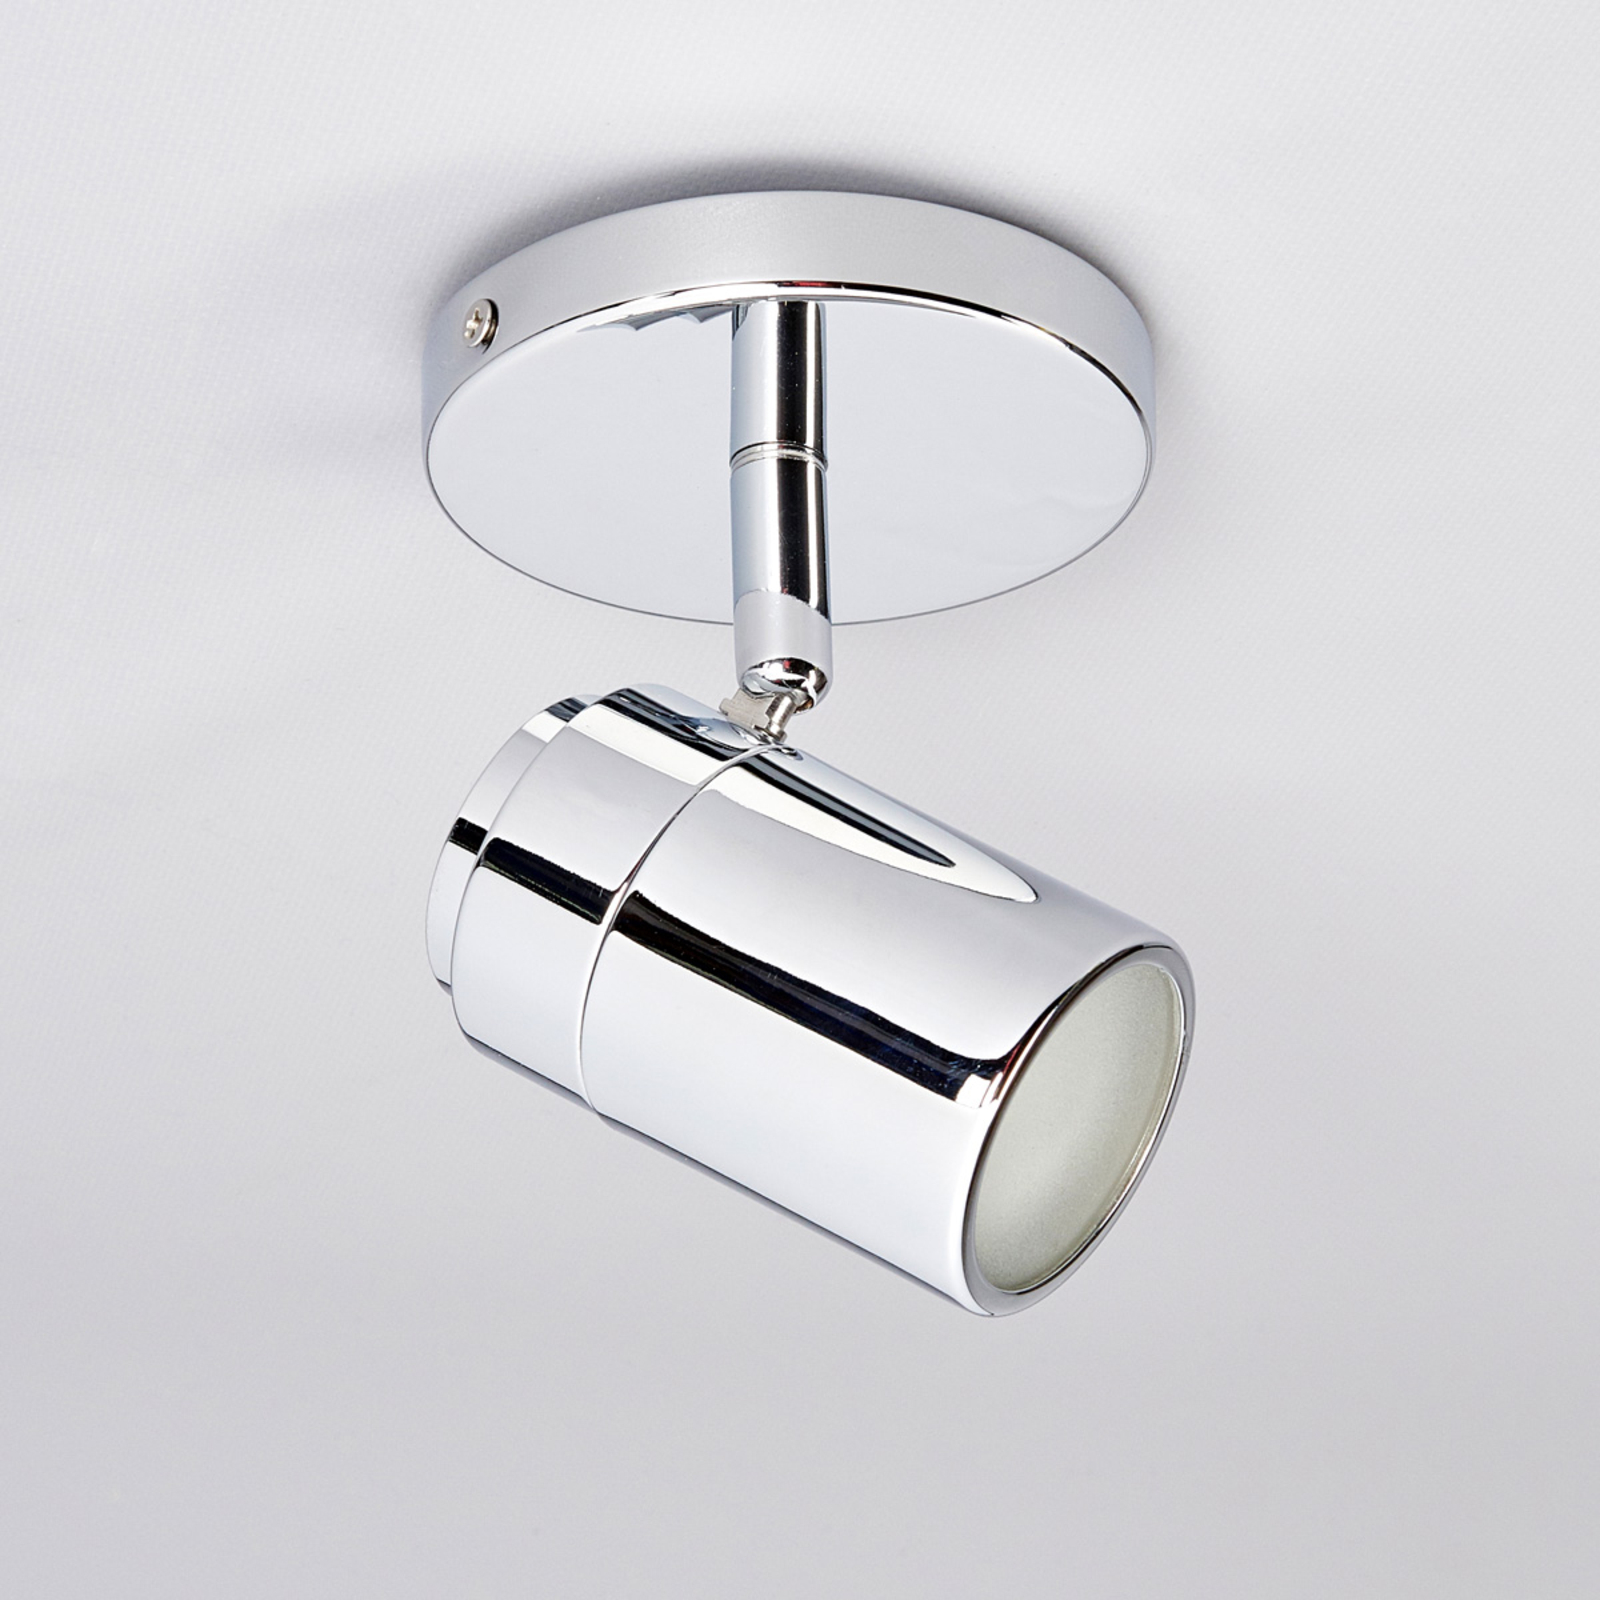 Lampenwelt Deckenlampe Dejan dimmbar 3 flammig, GU10, A++ in Chrom aus Metall u.a Badezimmerleuchte Modern - Bad Deckenleuchte Lampe für Badezimmer spritzwassergeschützt 